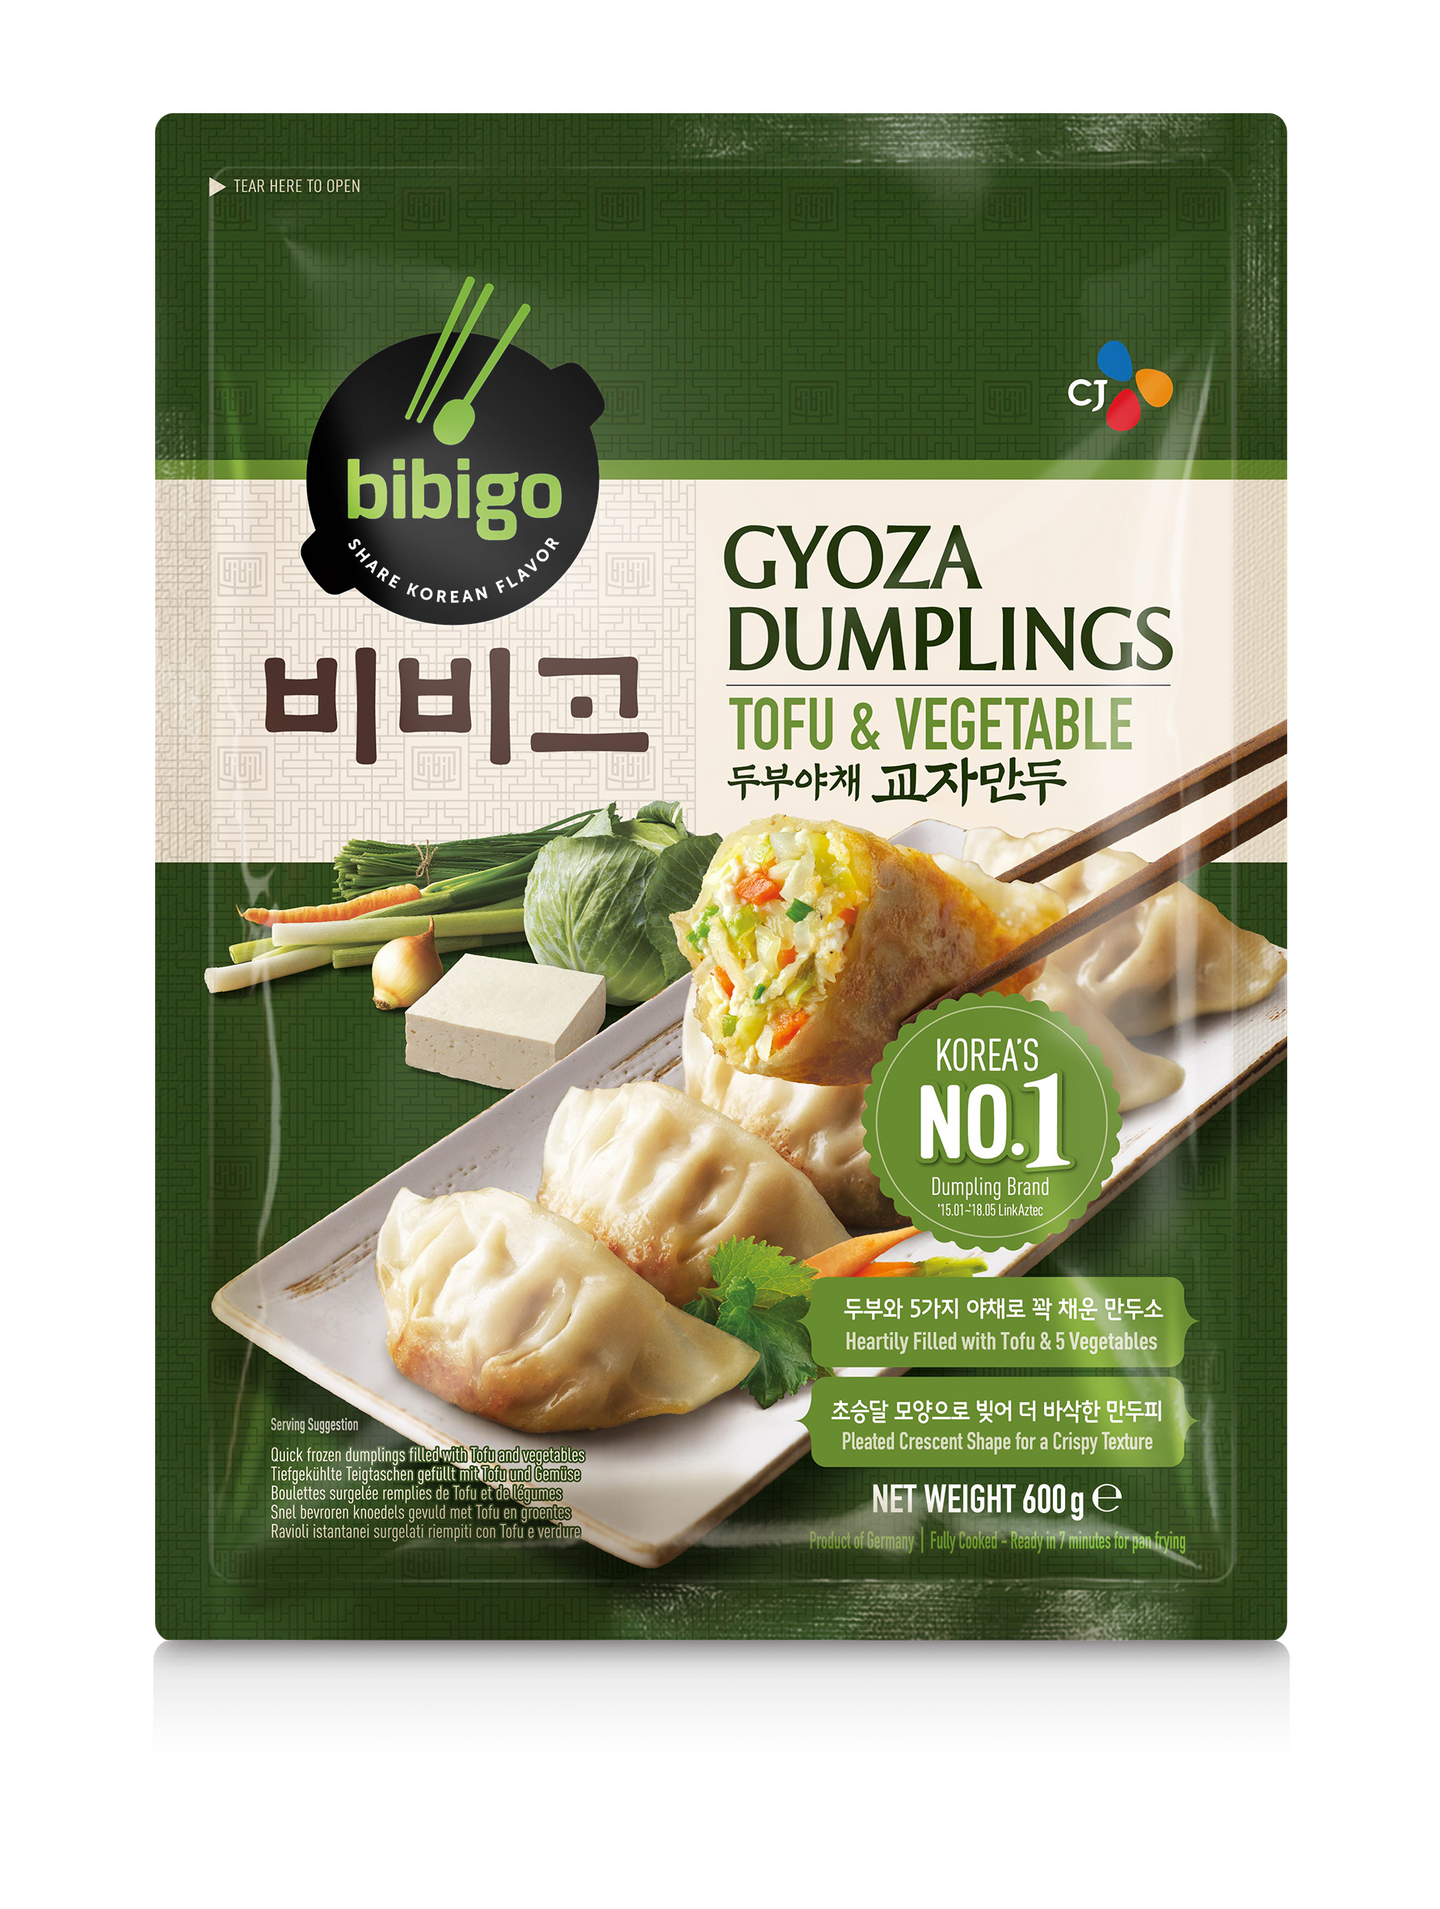 Gyoza Dumplings Tofu & Vegetable 30kpl/600g pakaste